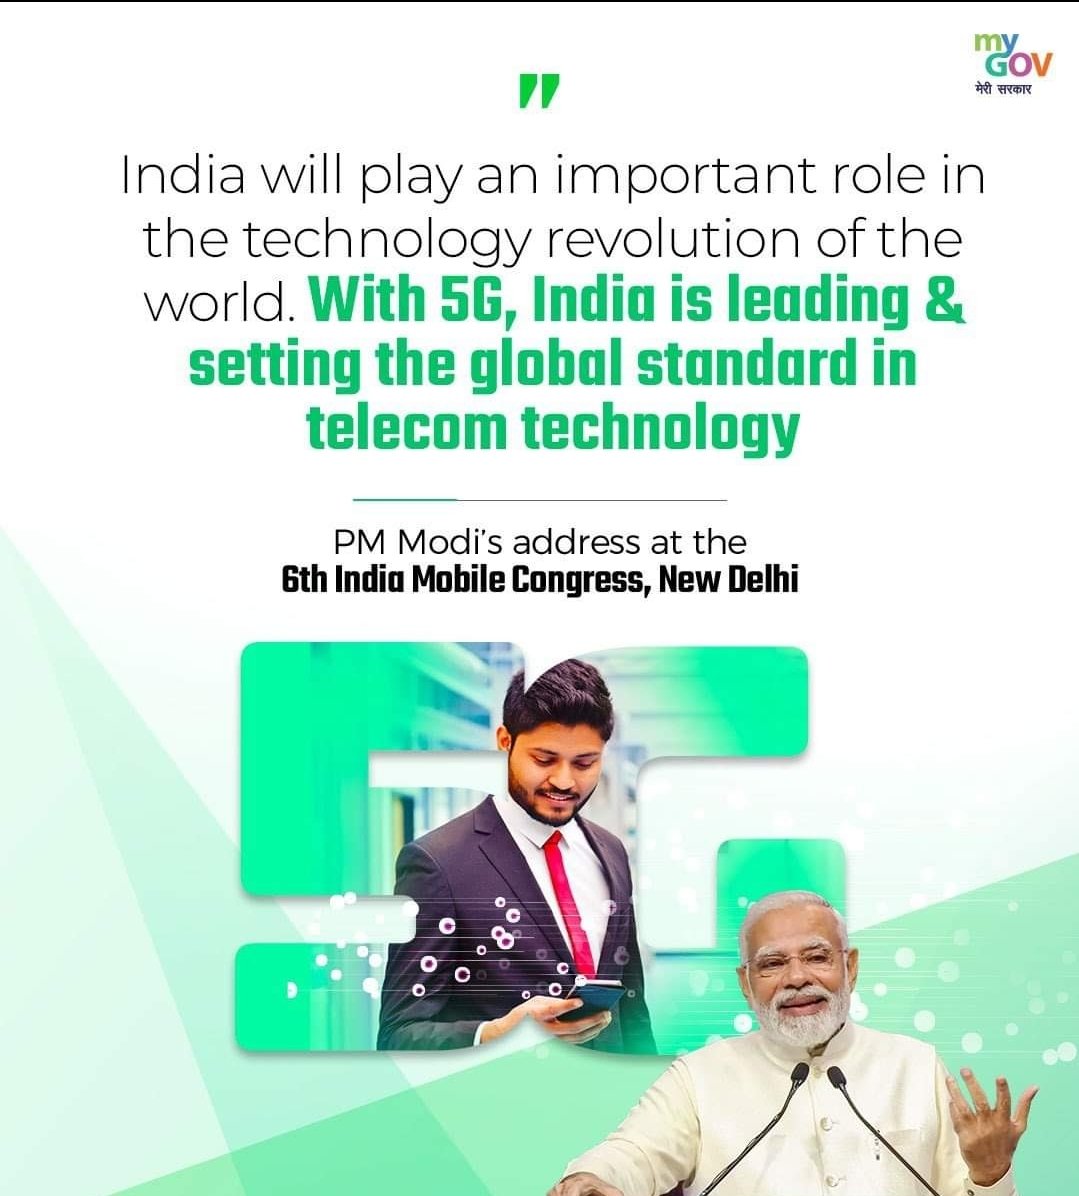 #Catalyzing #NEW #IndiasTechade Here are #highlights from PM 
Sh @narendramodi ji #historic #address at 6th #IndiaMobileCongress #NewDelhi as he launched #5GServices in #Country
#IMC2022
#DigitalIndia
#5GLaunch
#Data
#AI
#DigitalTransformation
#NewIndia
#Modi_Development_Model